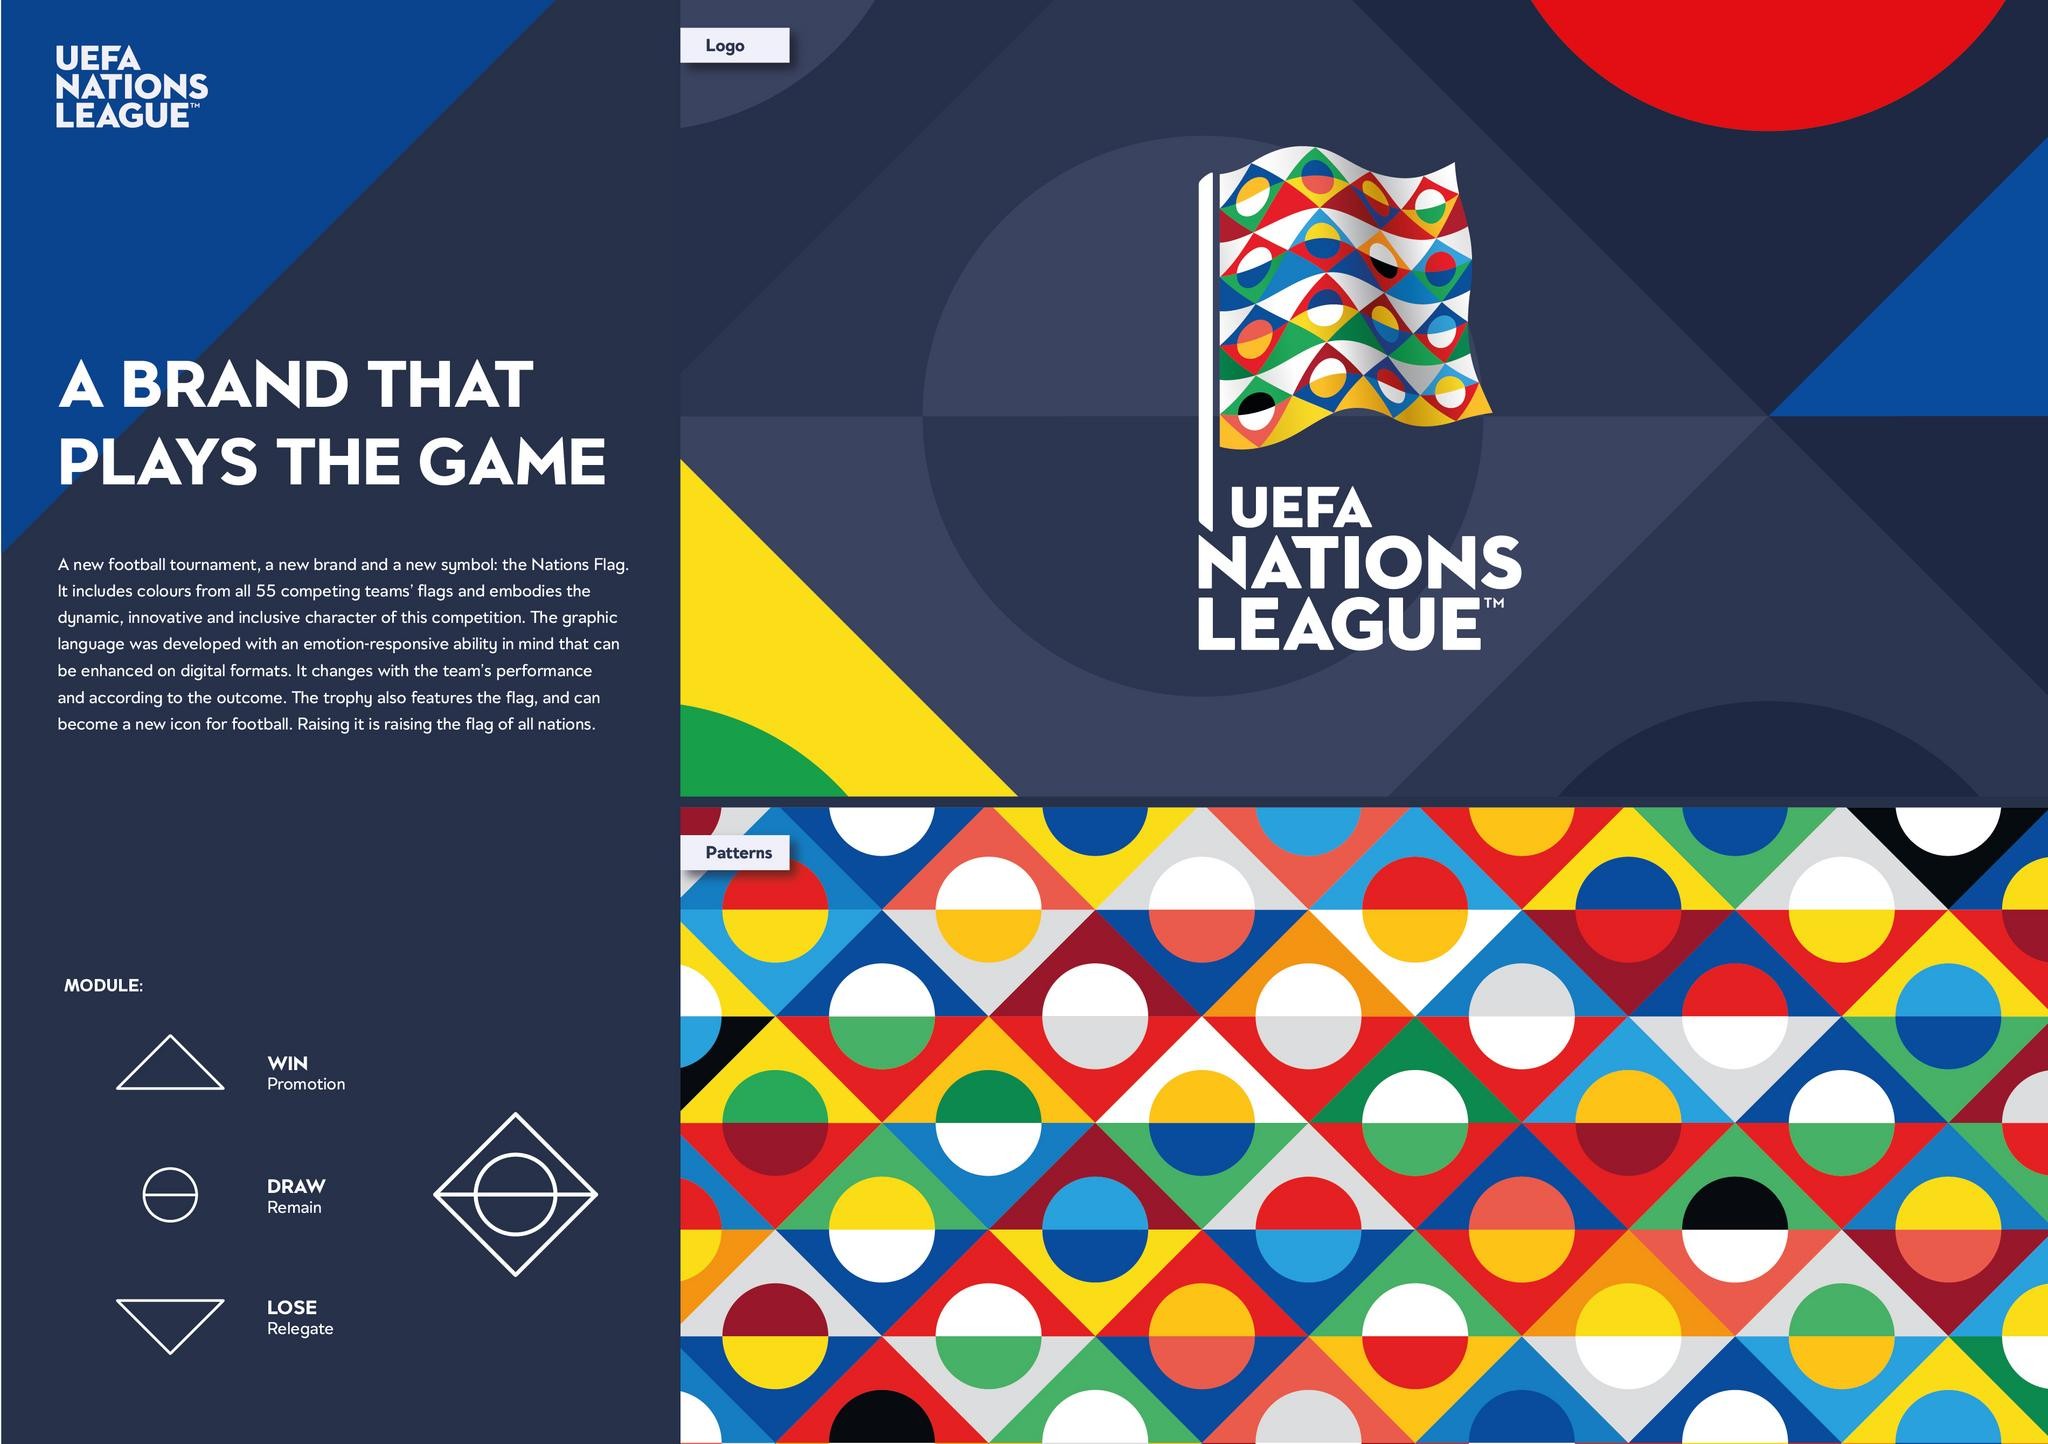 UEFA NATIONS LEAGUE BRAND